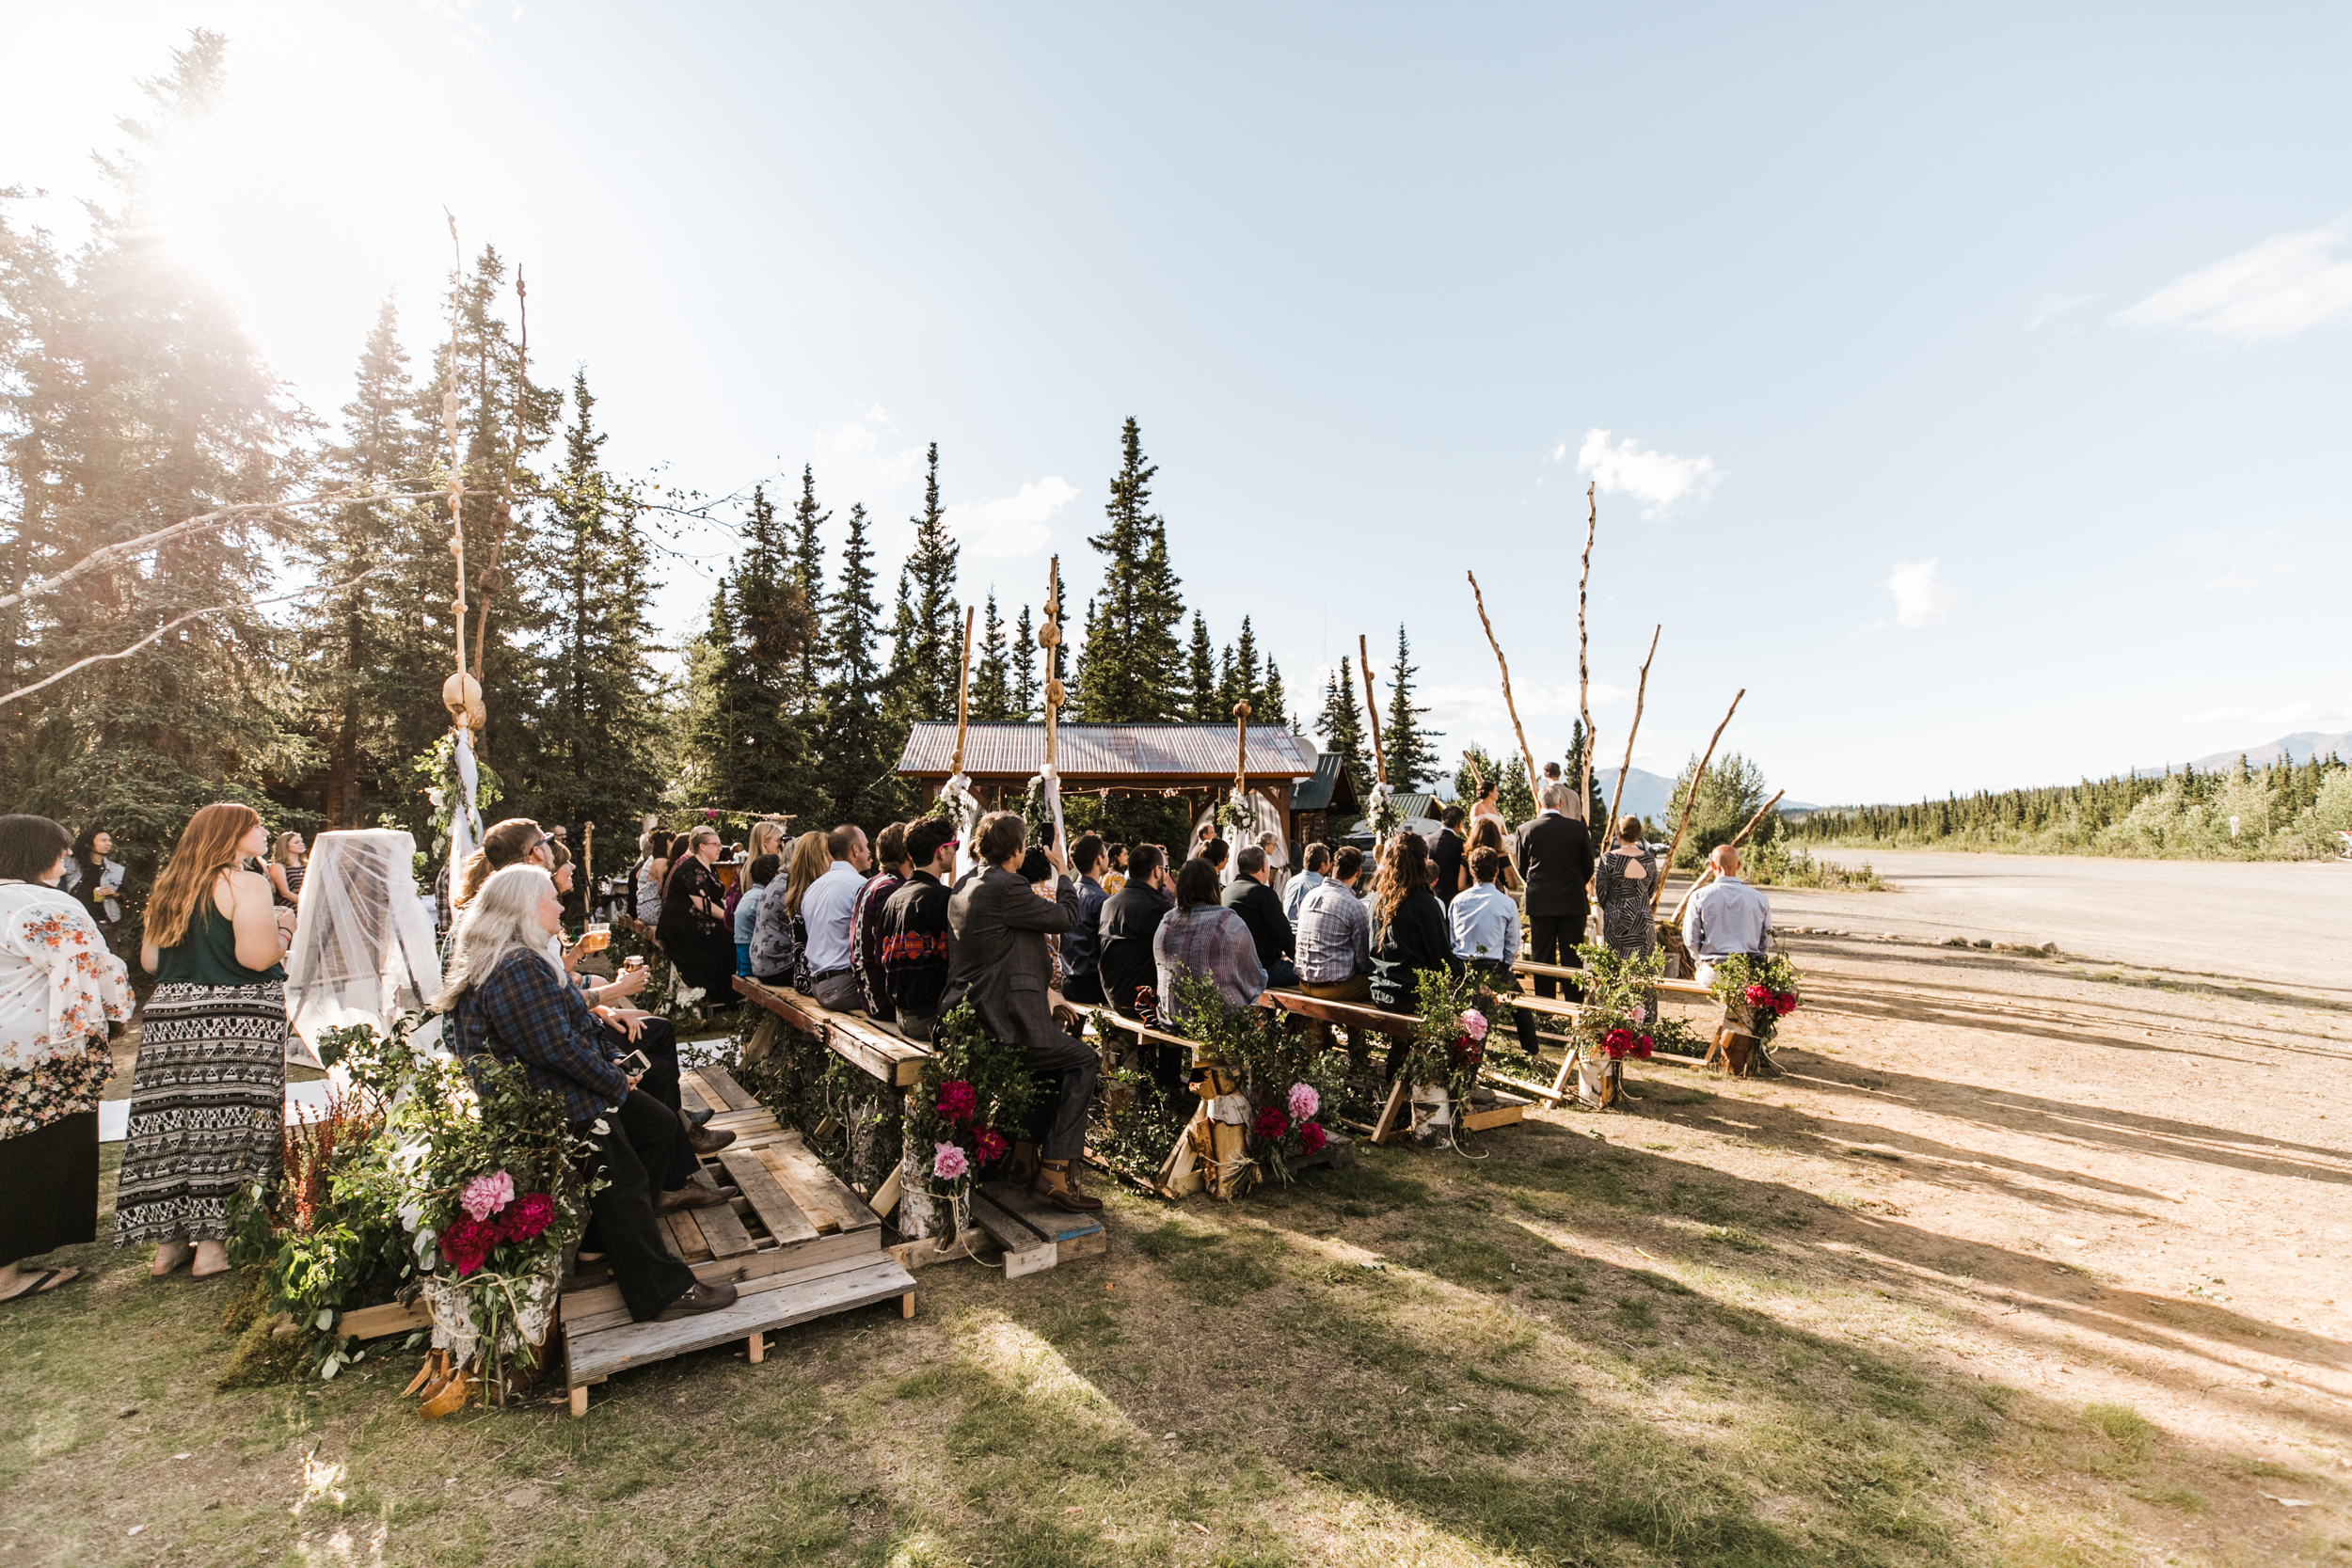 morgan + evan's intimate wedding on the denali airstrip | alaska destination wedding near Denali National Park and Preserve | the hearnes adventure photography 